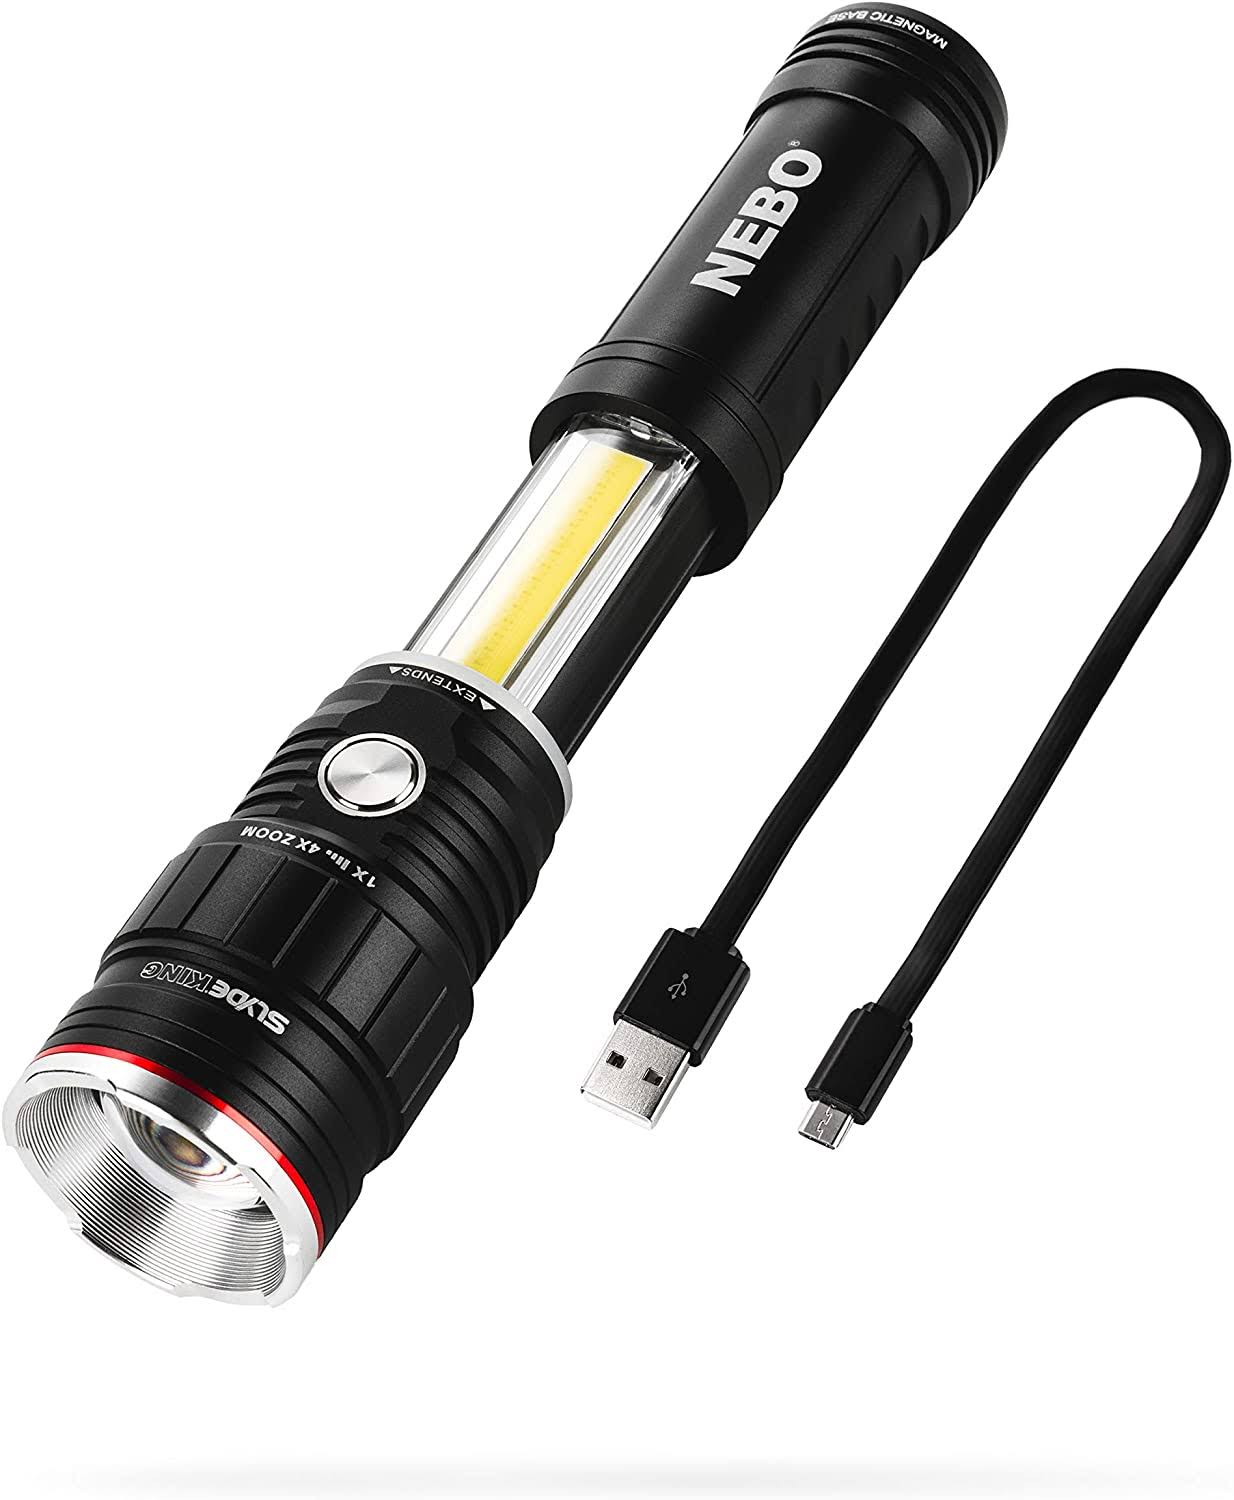 Nebo Slyde 500 Lumen Rechargeable Flashlight Work Light White and Red Light Mode and Red Flashing Light Mode